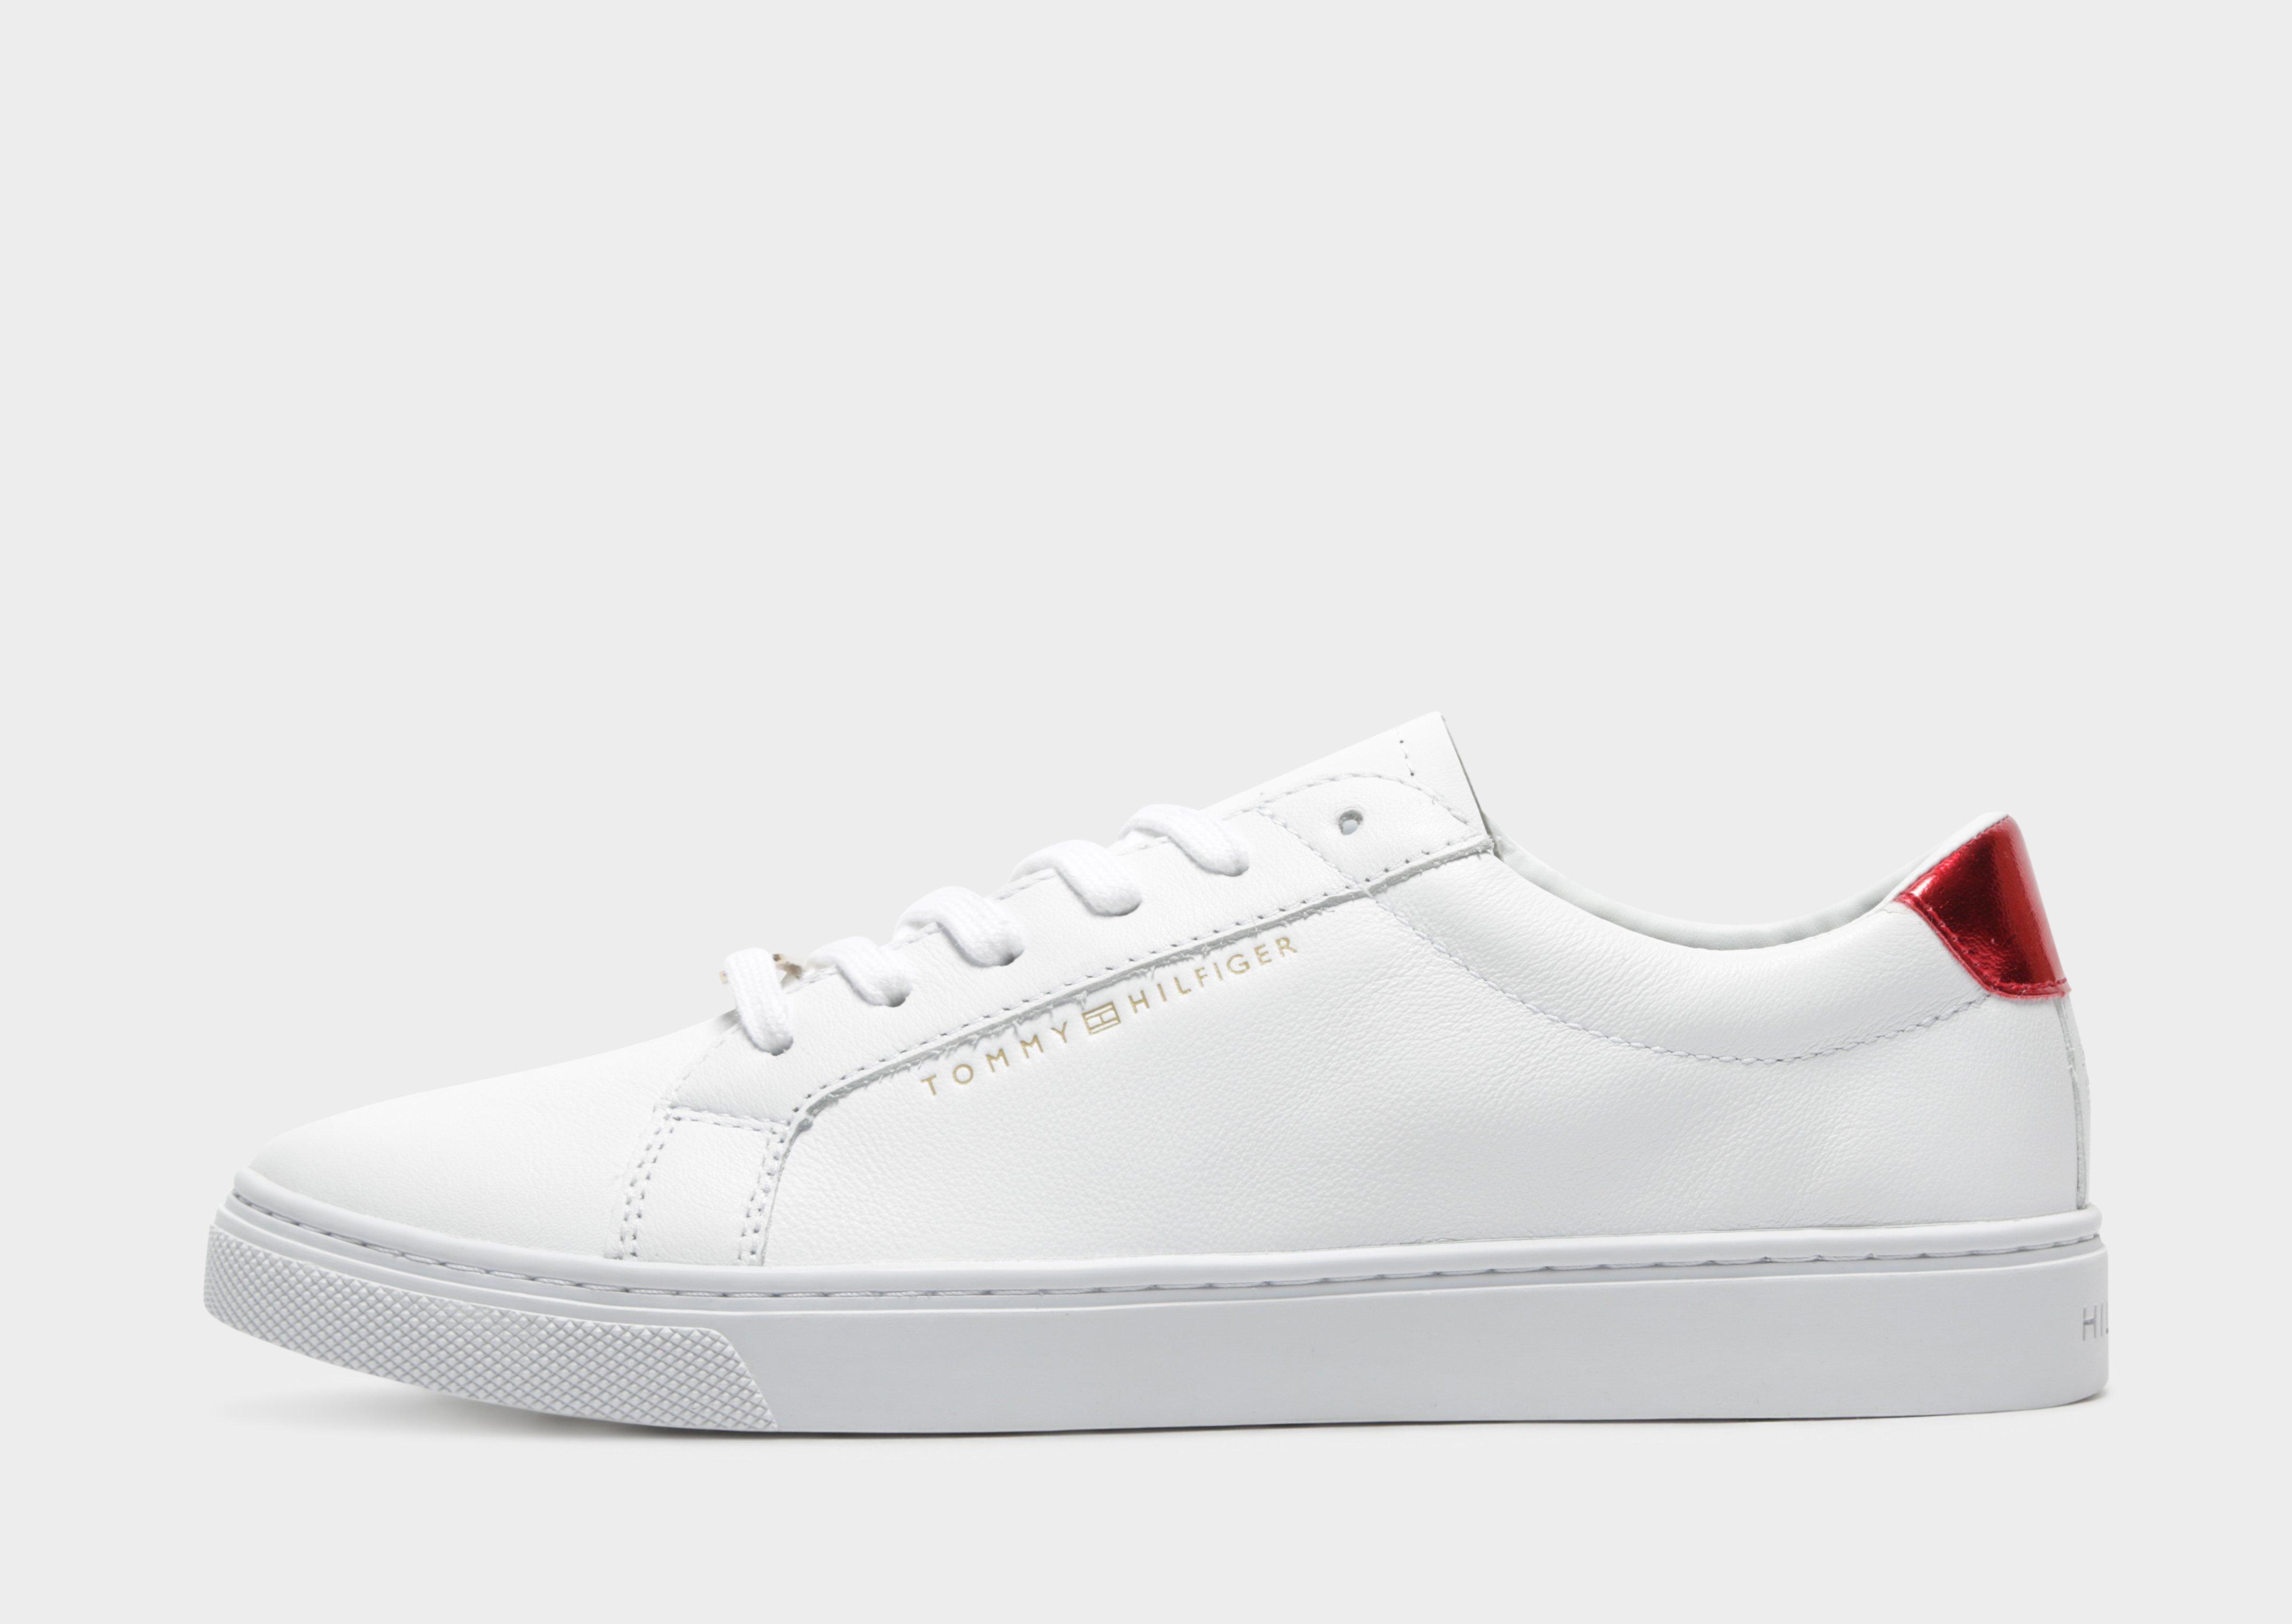 New Tommy Hilfiger Sneakers Online, 52% OFF | blountpartnership.com